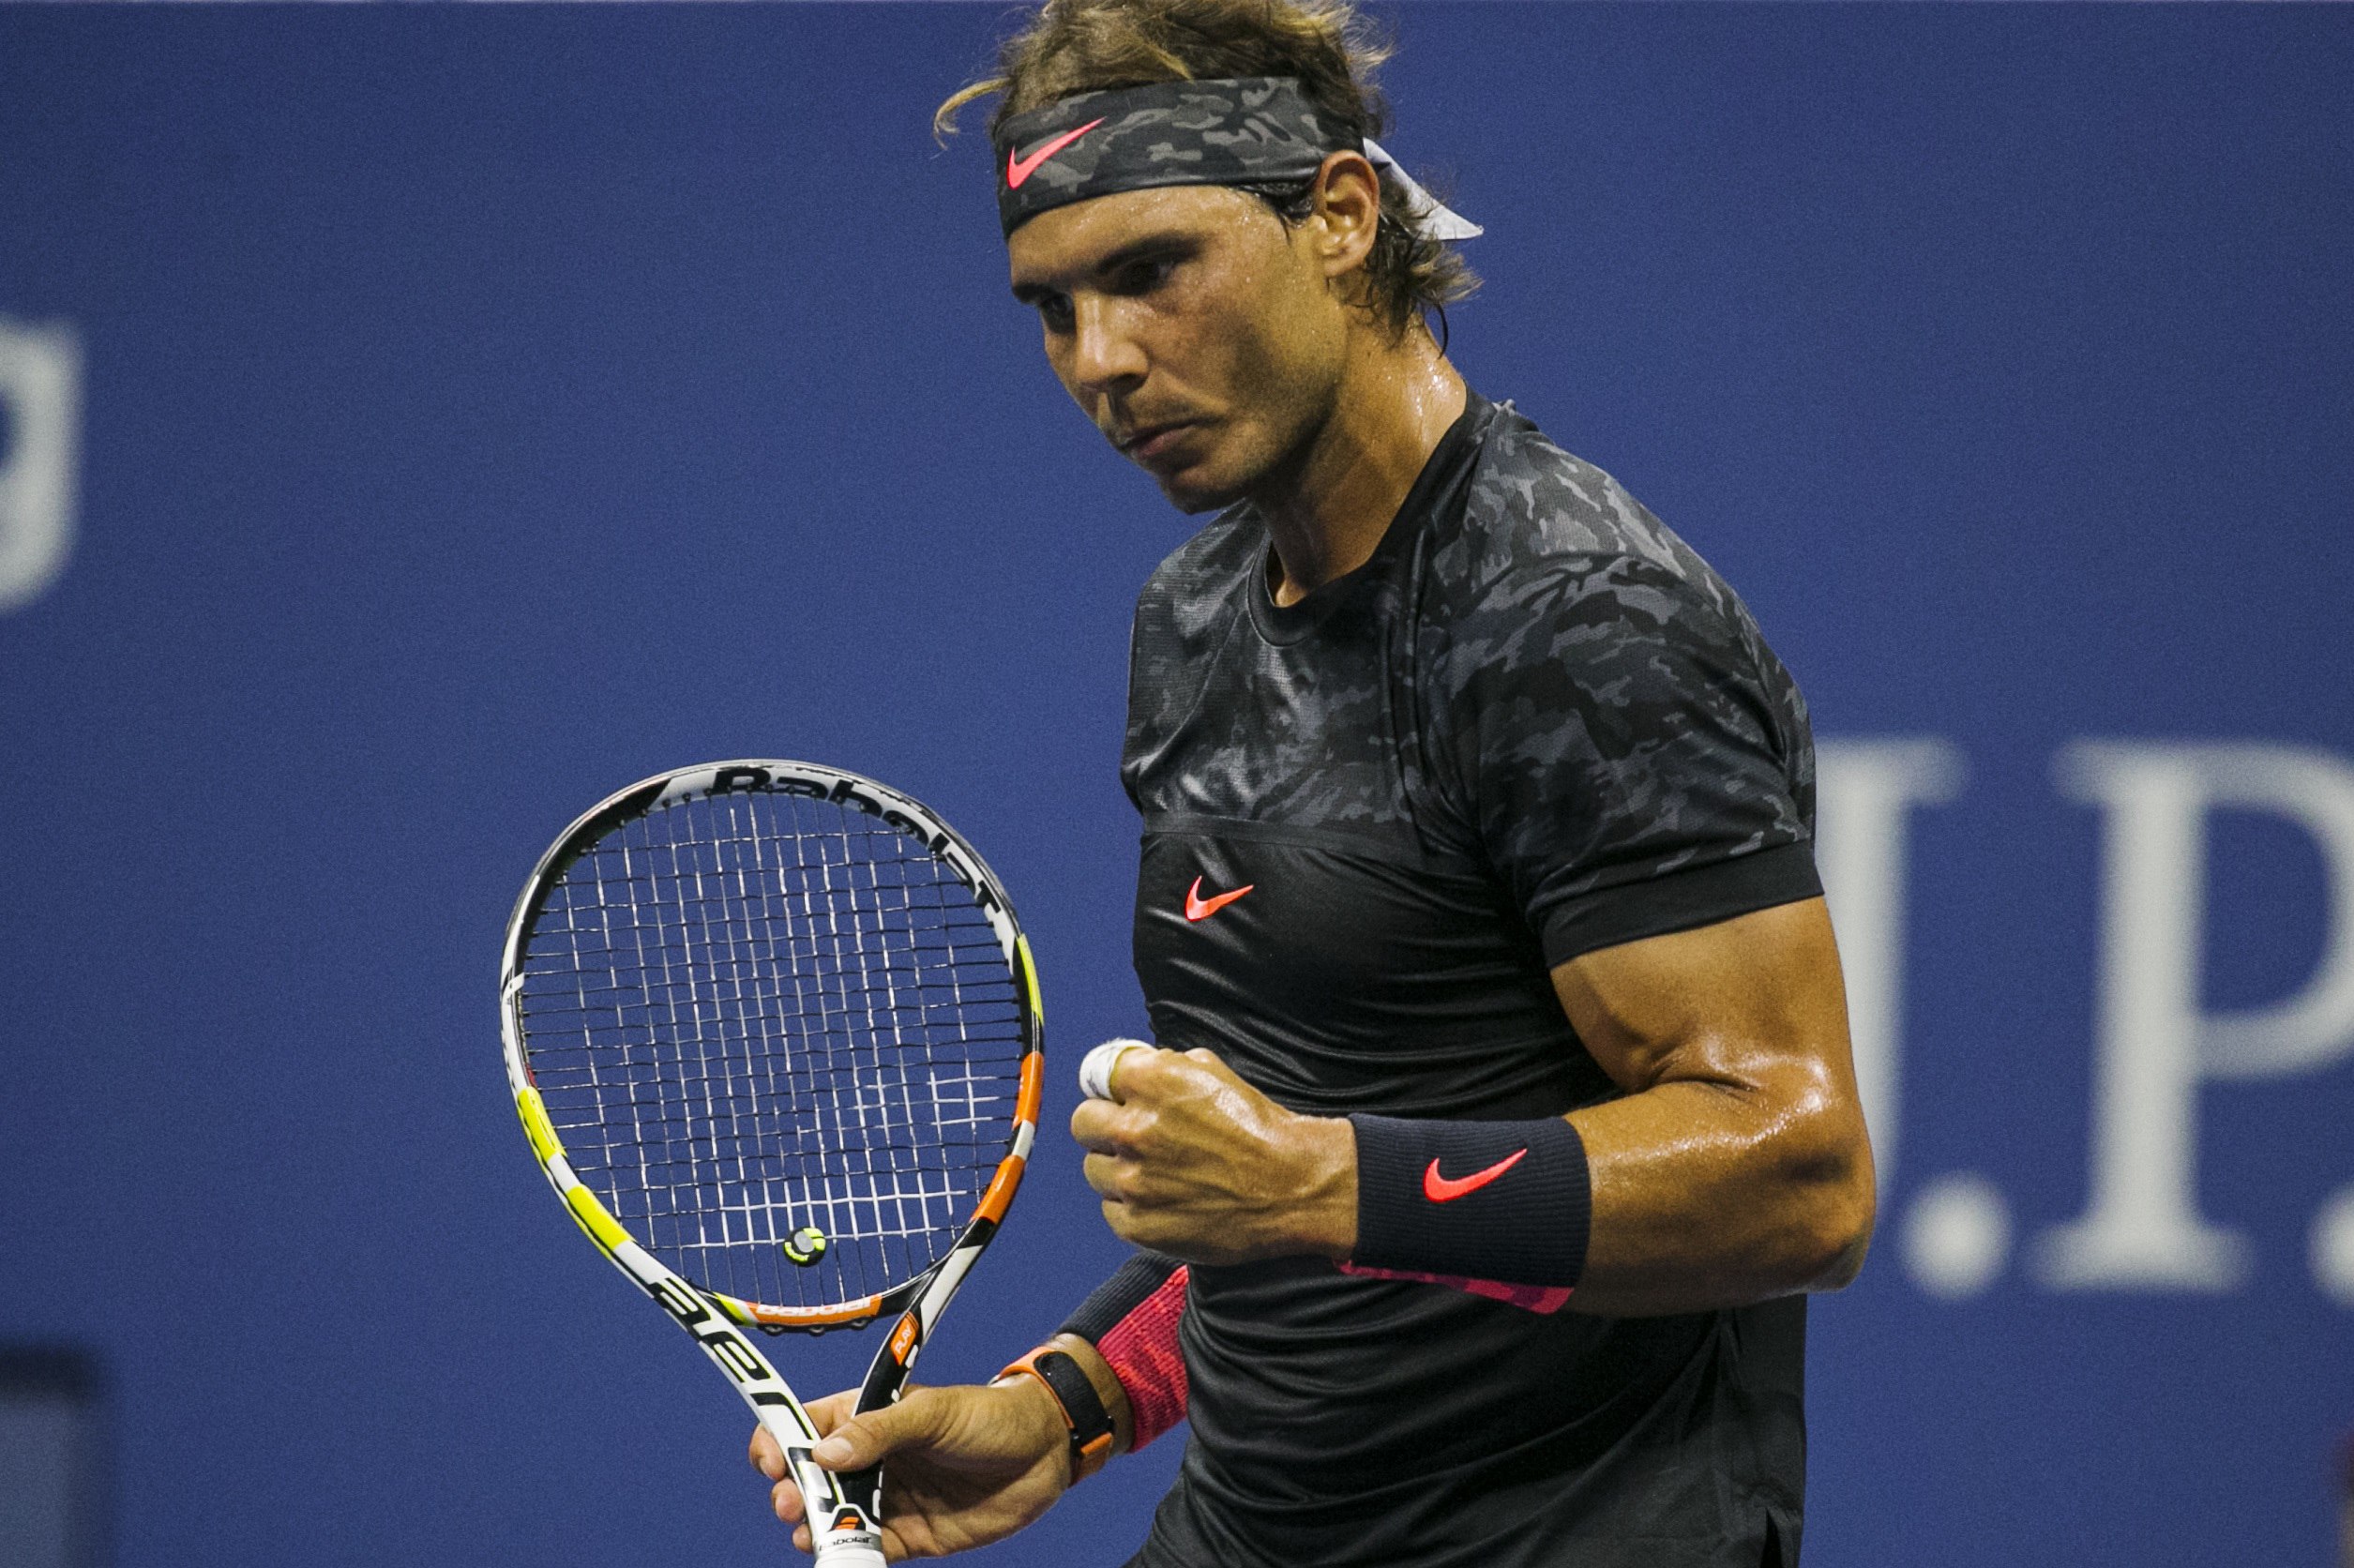 PHOTOS: Rafael Nadal beats Borna Coric to move into US Open second round – Rafael ...2510 x 1672